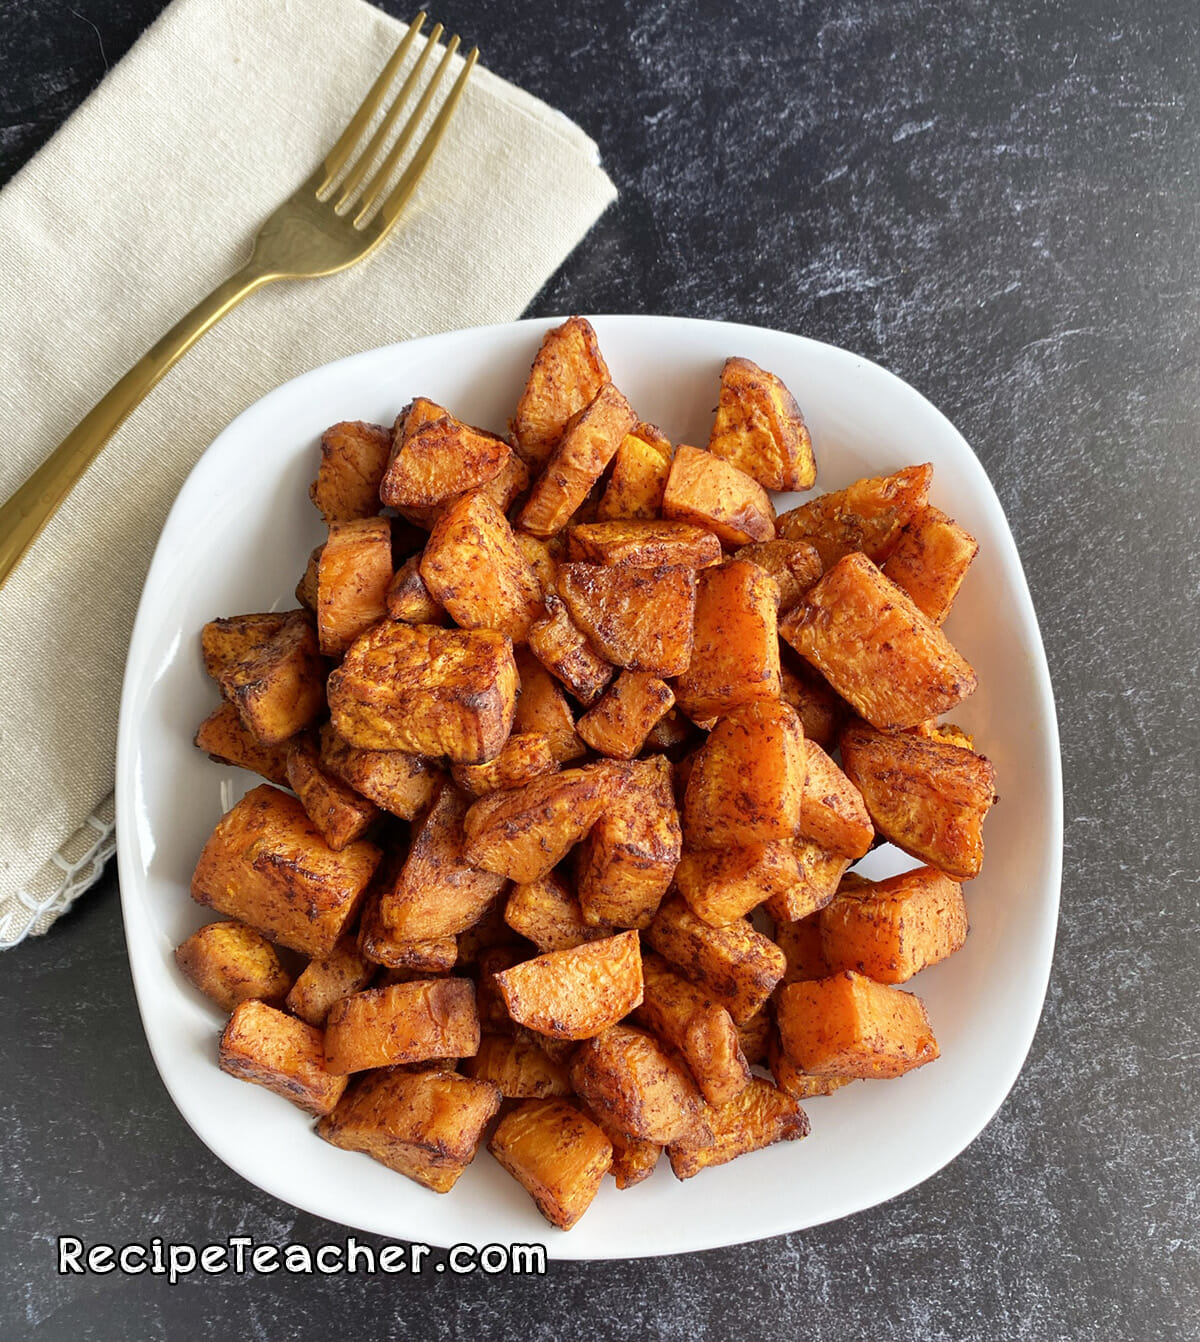 Recipe for air fryer sweet potatoes